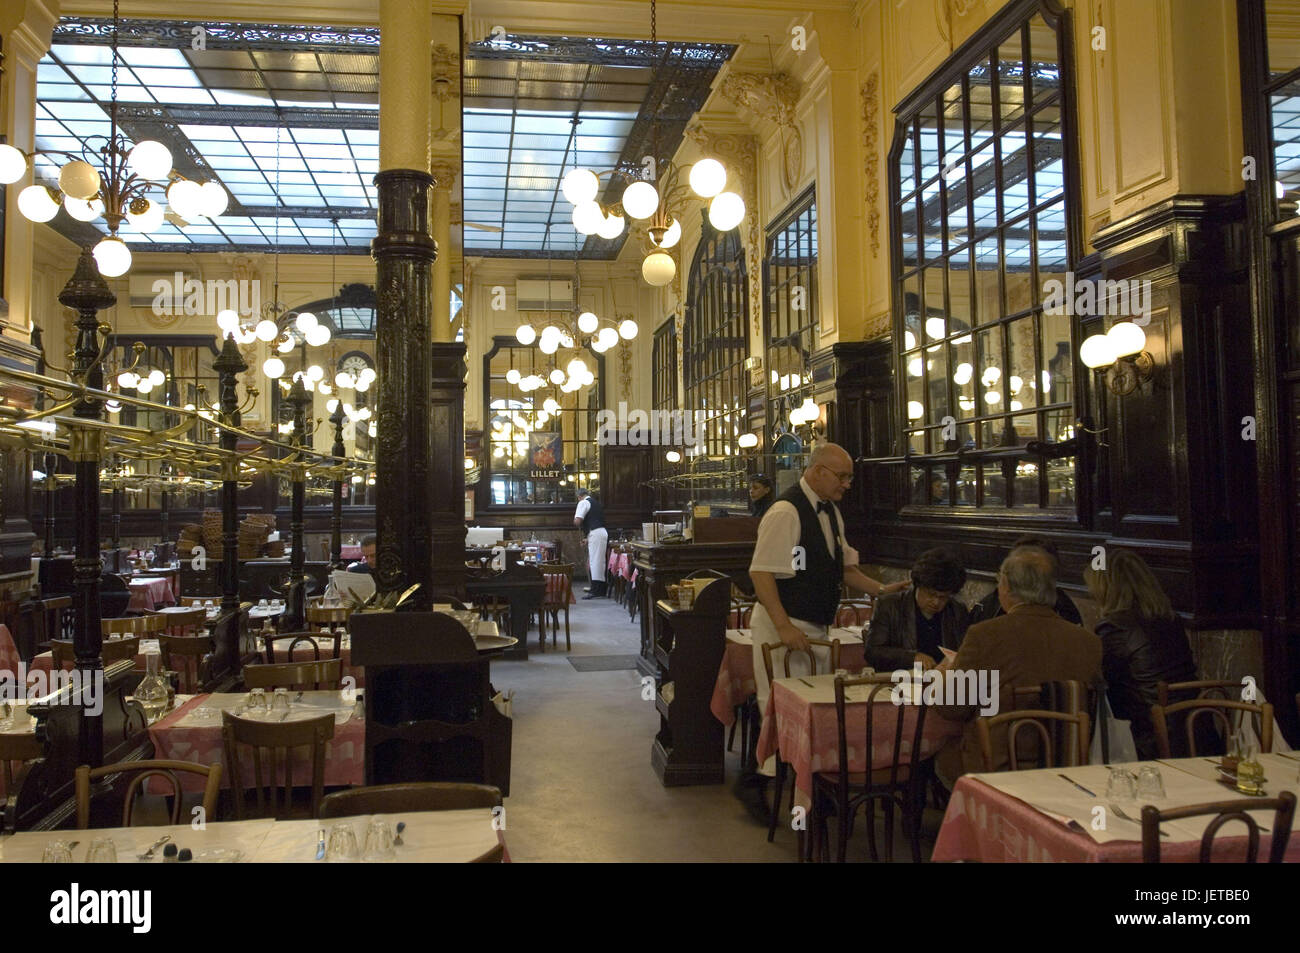 France, Paris, Rue you Faubourg Montmartre, restaurant Chartier, candlestick, guests, waiters, inside, no model release, Stock Photo